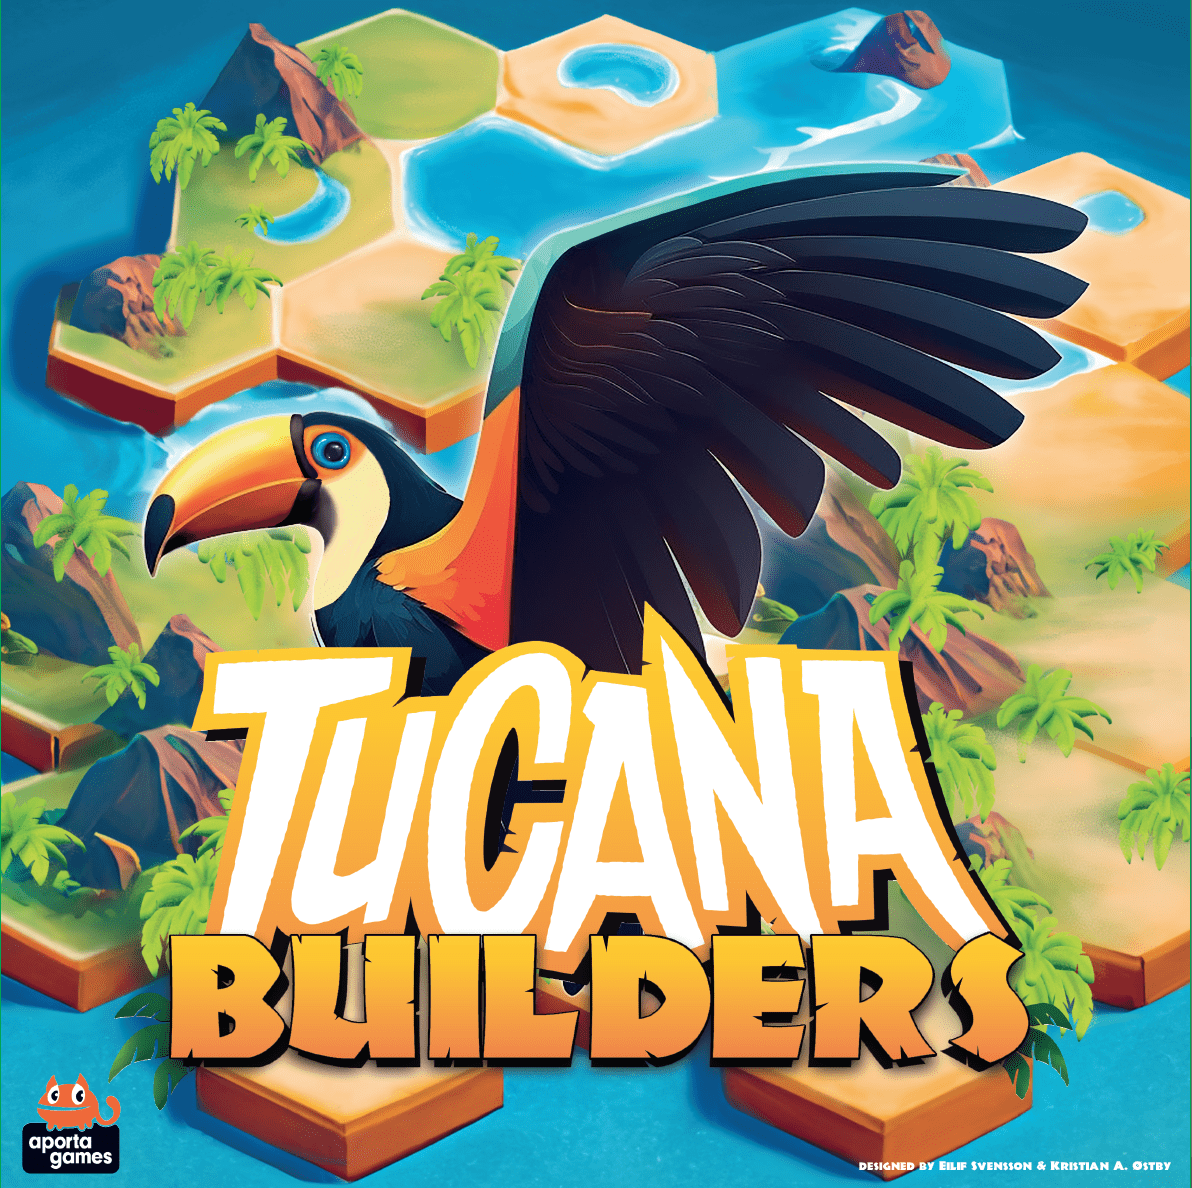 Tucana Builders (Bordspellen), Aporta Games